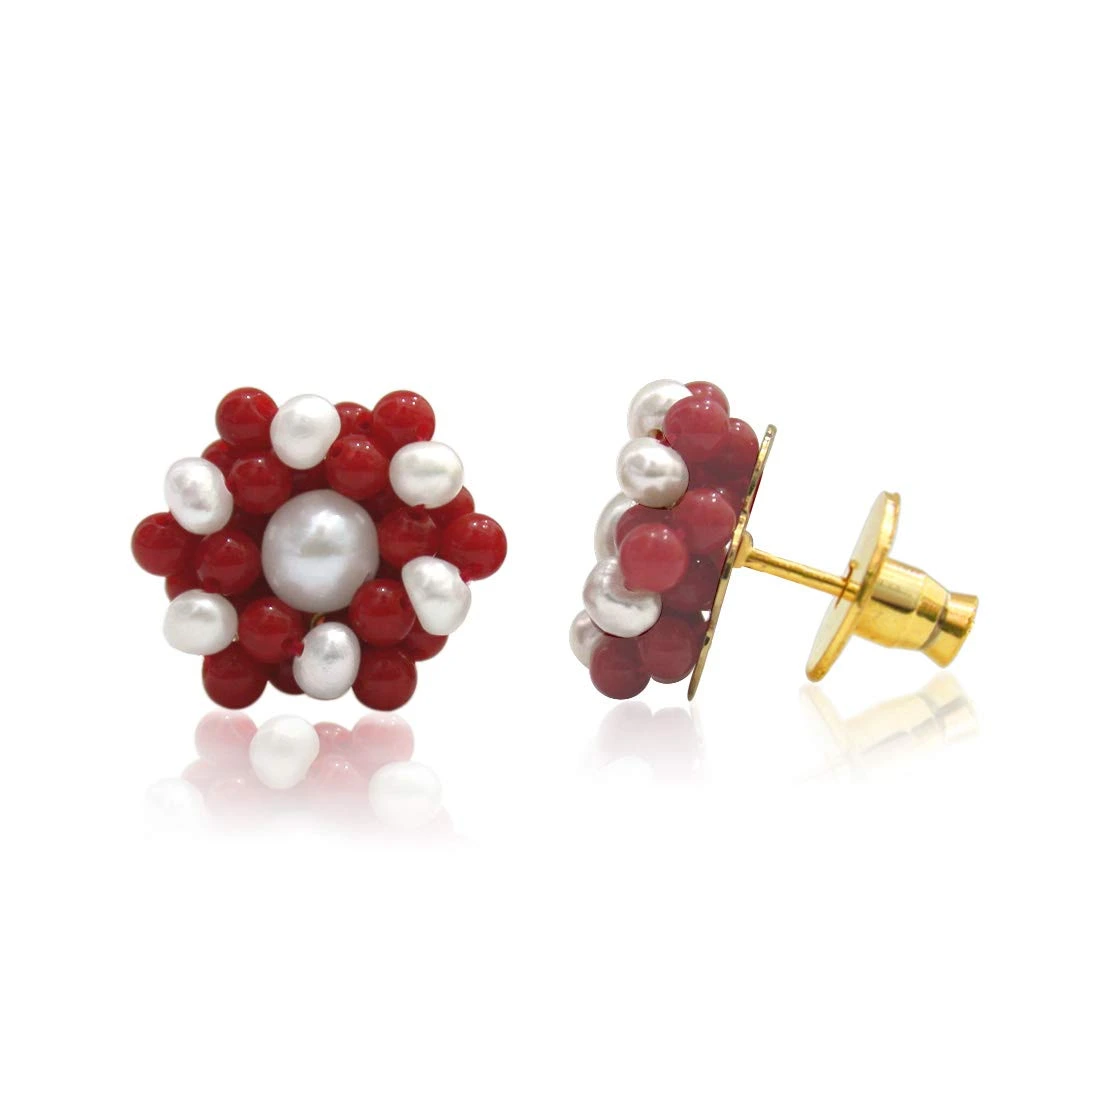 Real Freshwater Pearl & Red Coral Beads Kuda Jodi Earrings for Women (SE108)